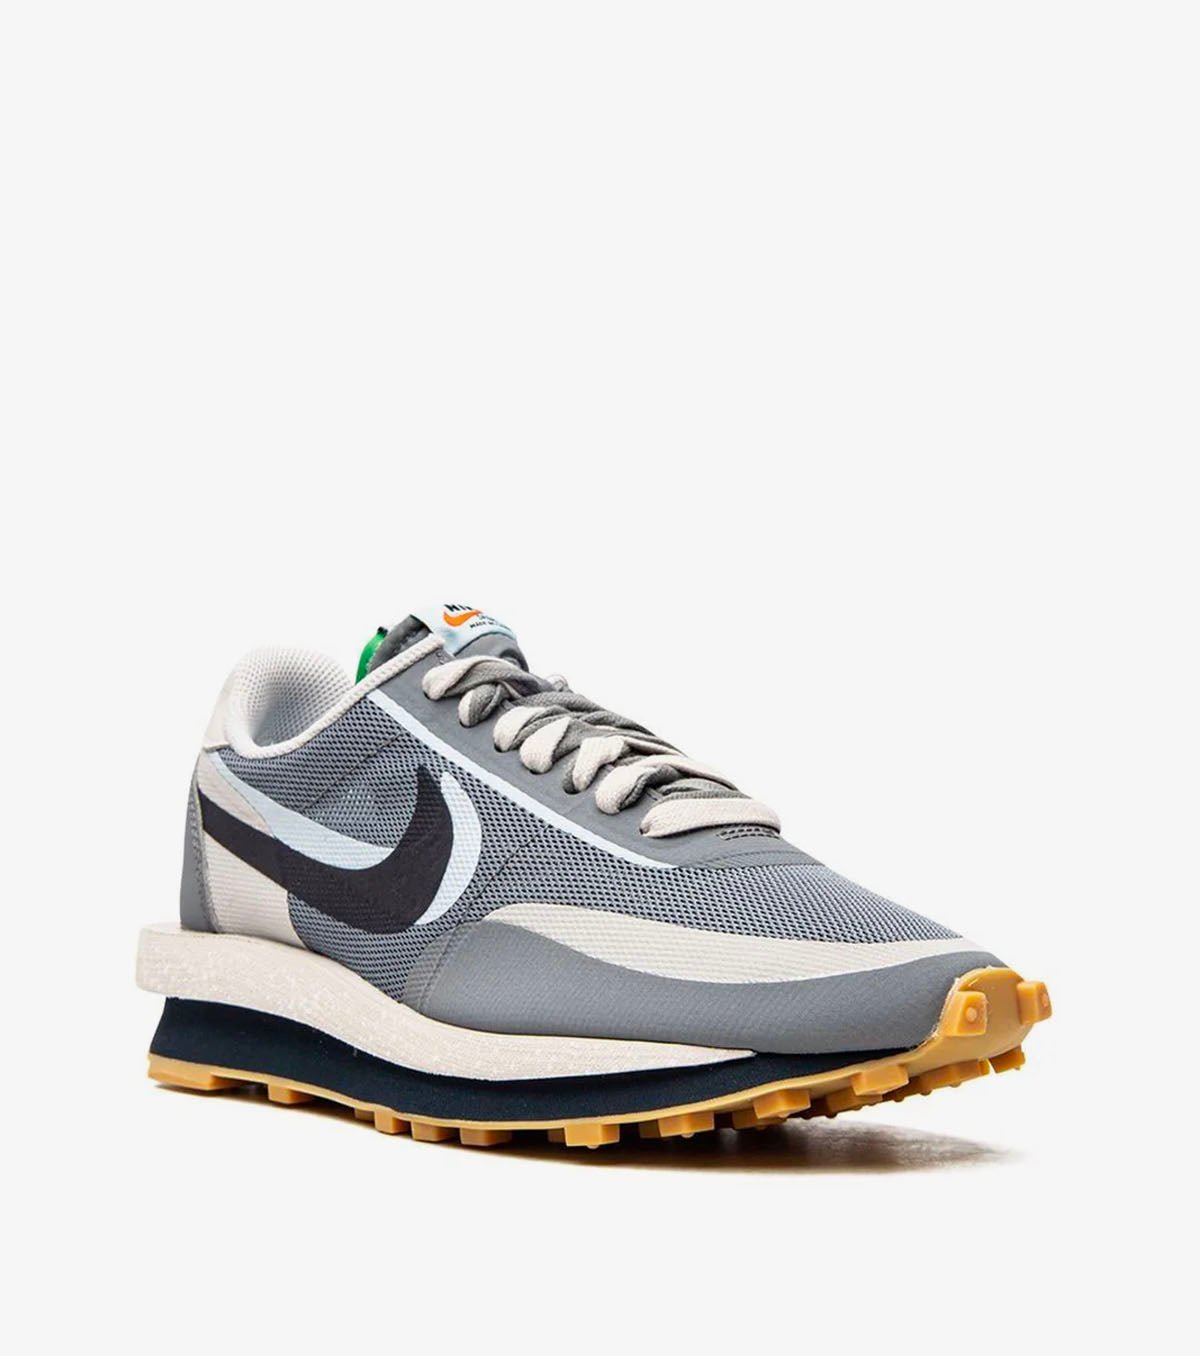 Nike x Clot x sacai LDWaffle "Cool Grey" Sneakers - SNKRBASE